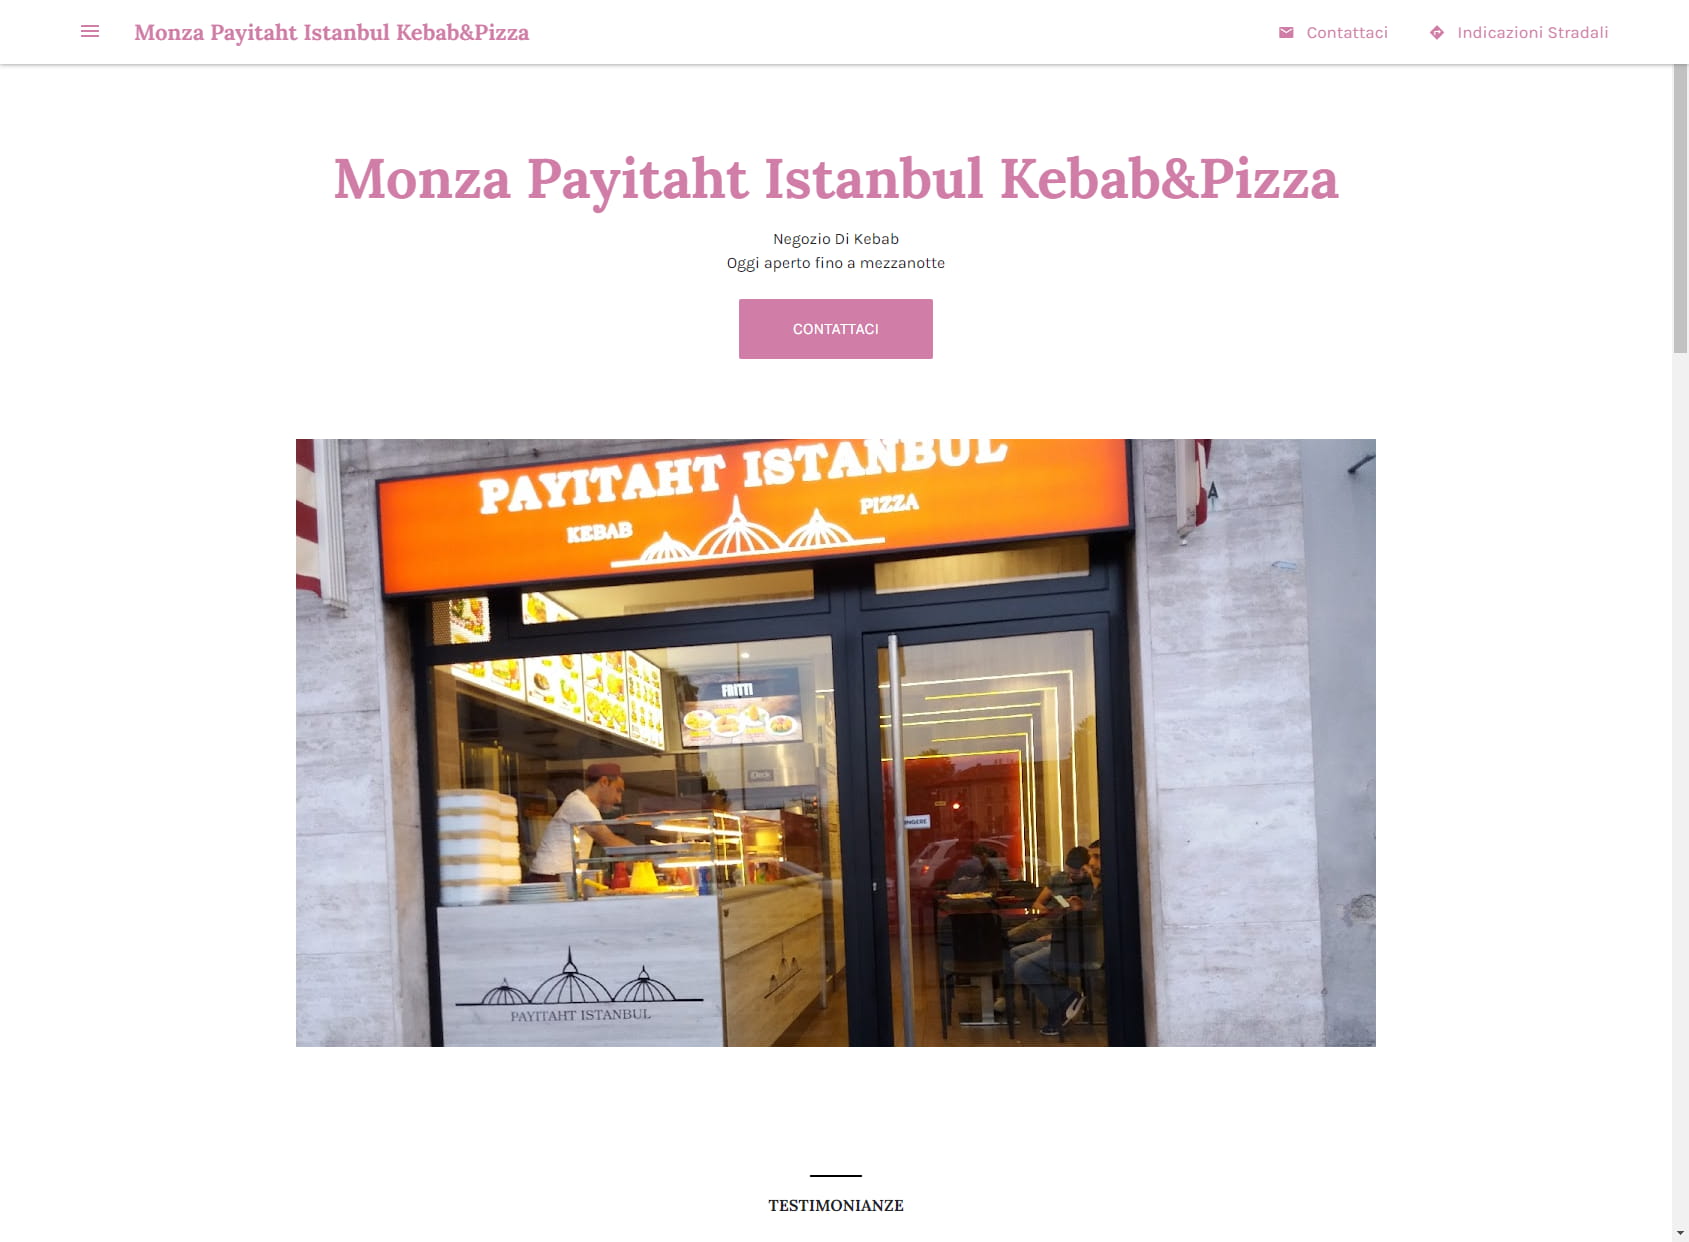 Monza Payitaht Istanbul Kebab&Pizza